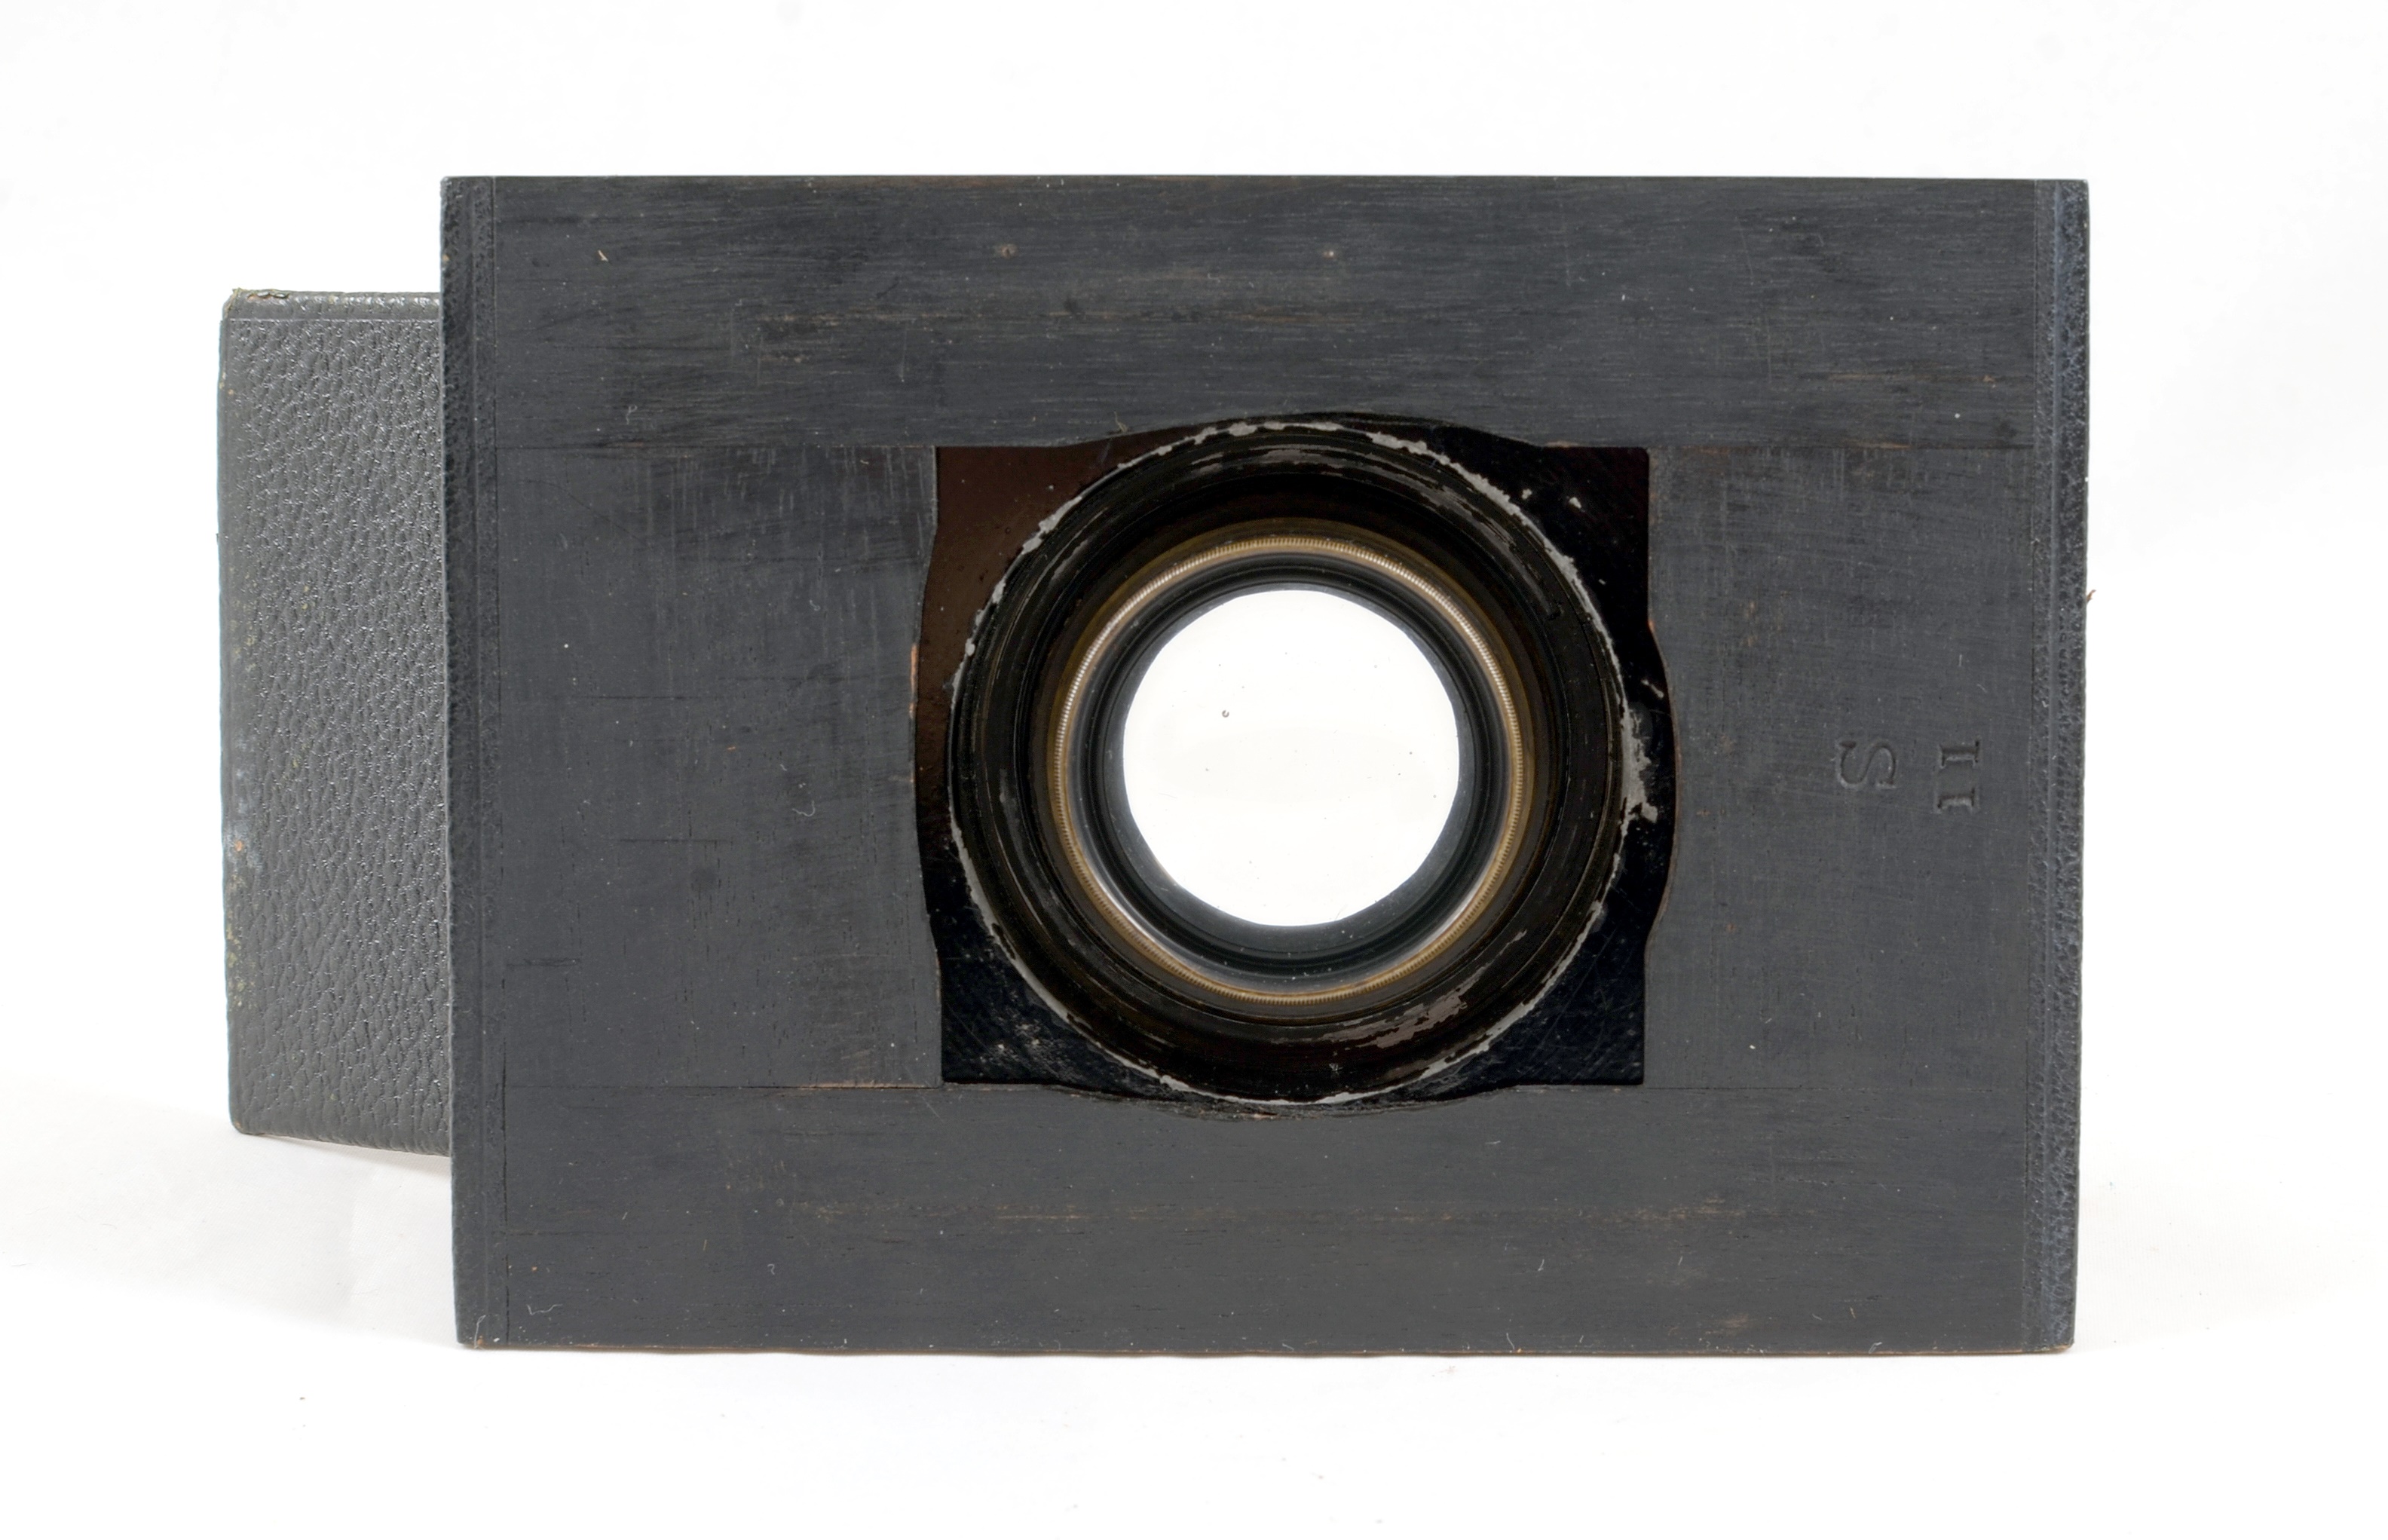 A Taylor, Taylor Hobson Cooke Series II Anastigmat f4.5 6" Lens. - Image 2 of 2